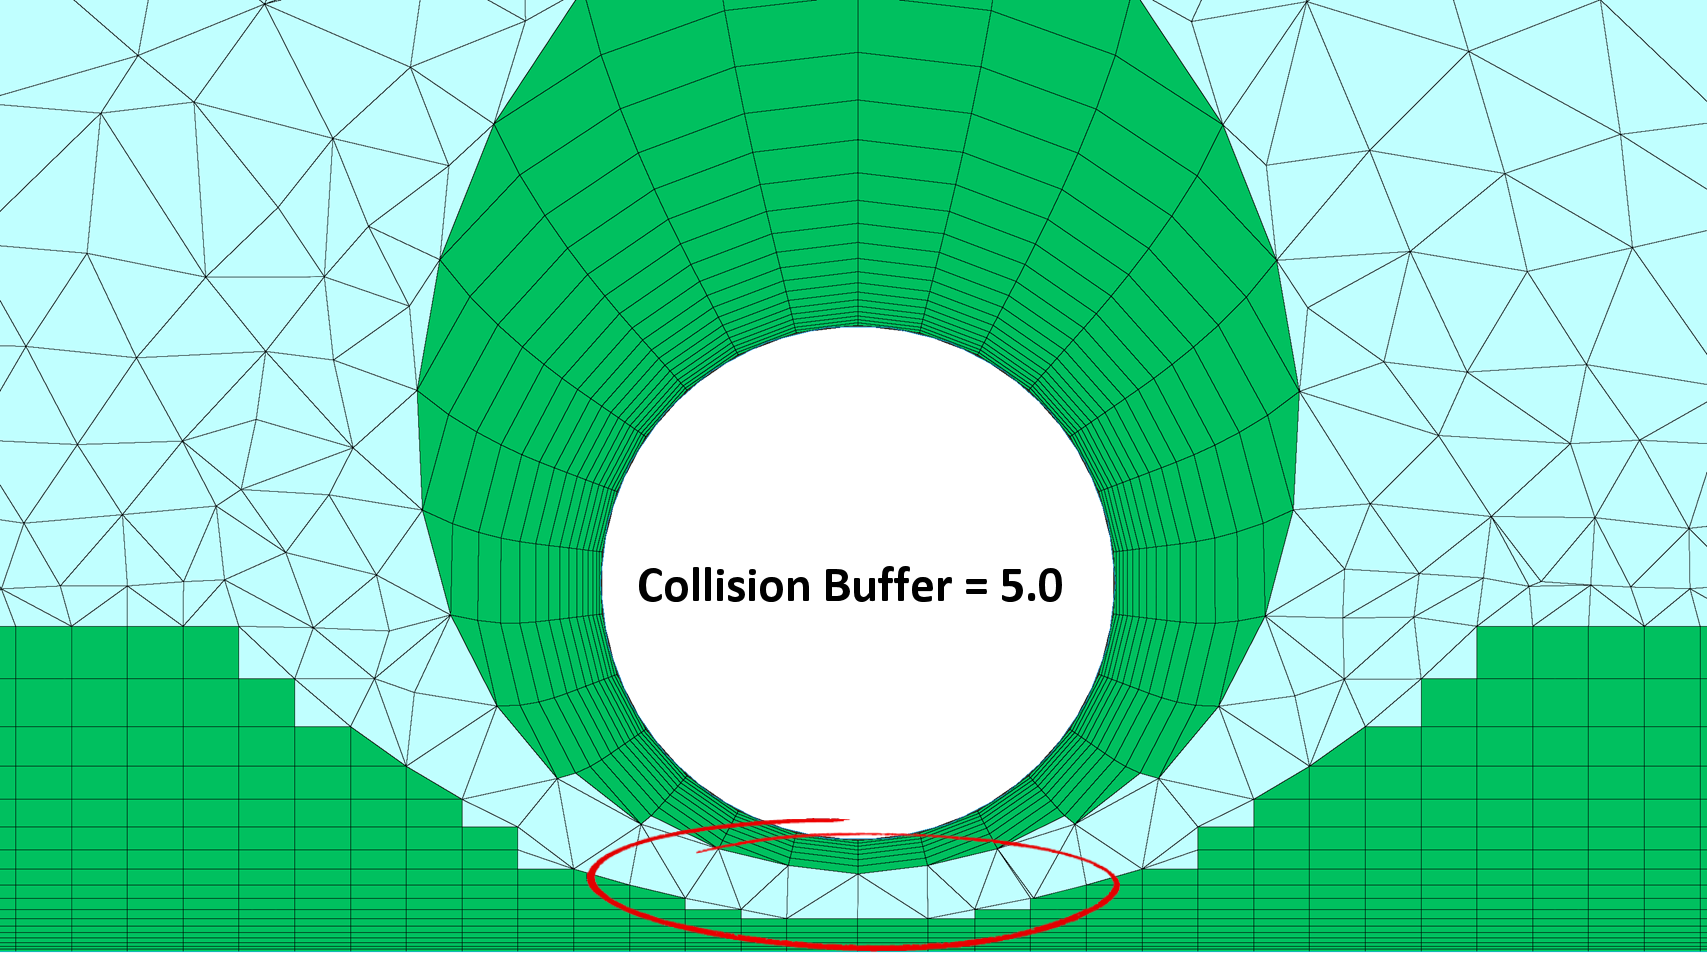 Collision Buffer = 5.0